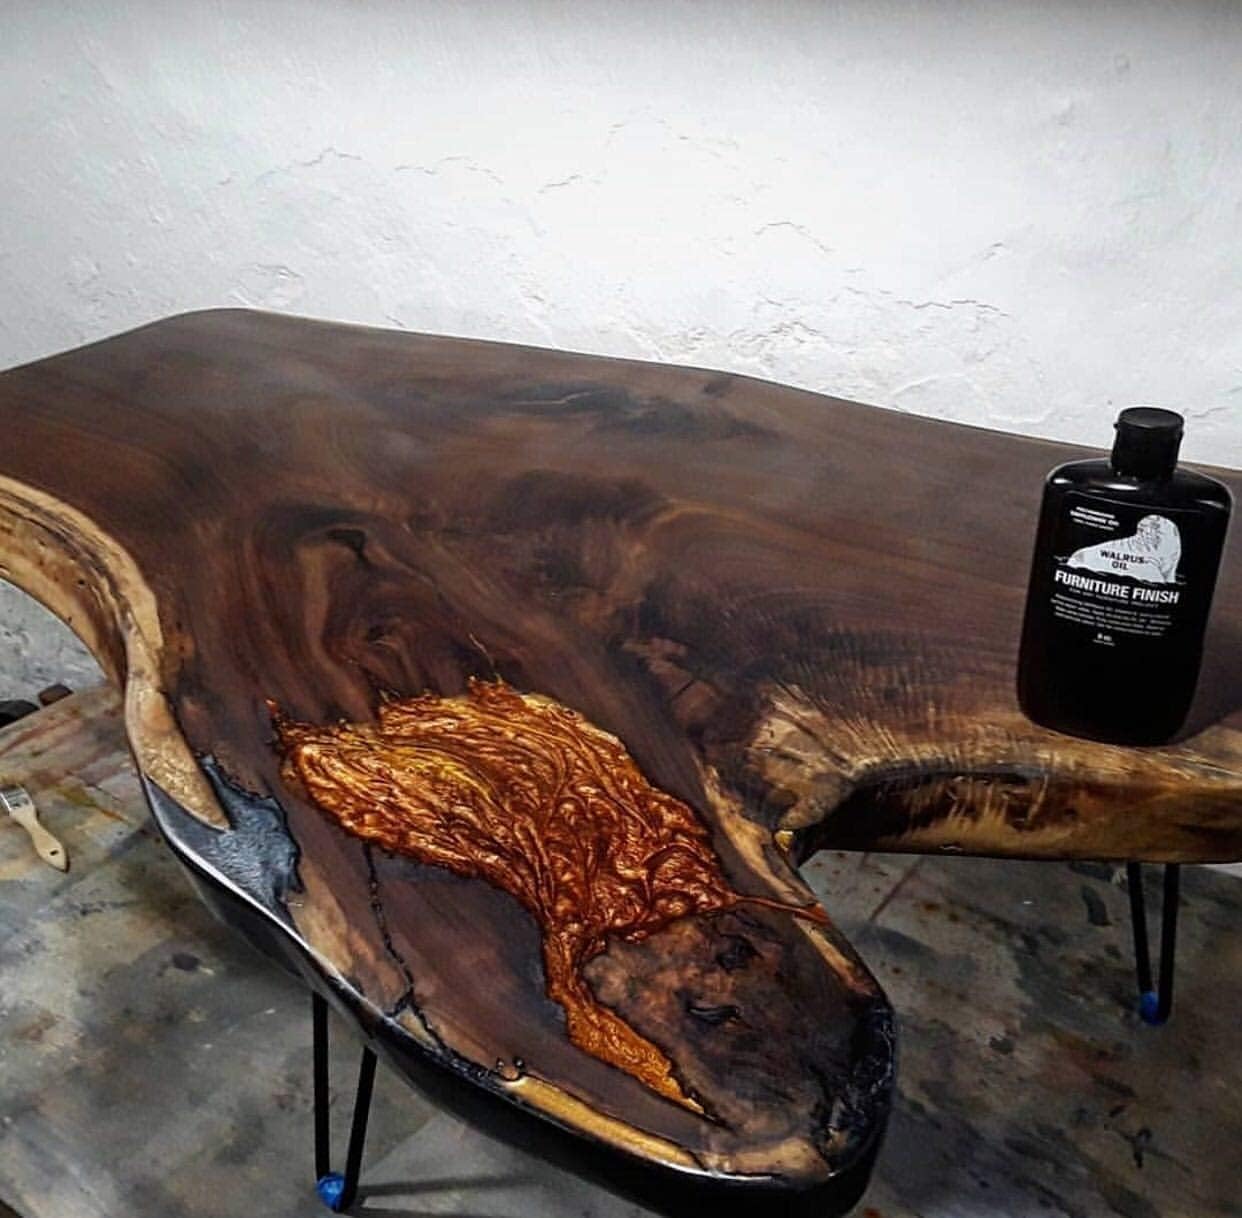 Walrus Oil - Furniture Finish Danish Oil. Tung Oil Based Wood Sealer. Naturally VOC-Free, Matte Finish, 8oz Bottle : Health & Household